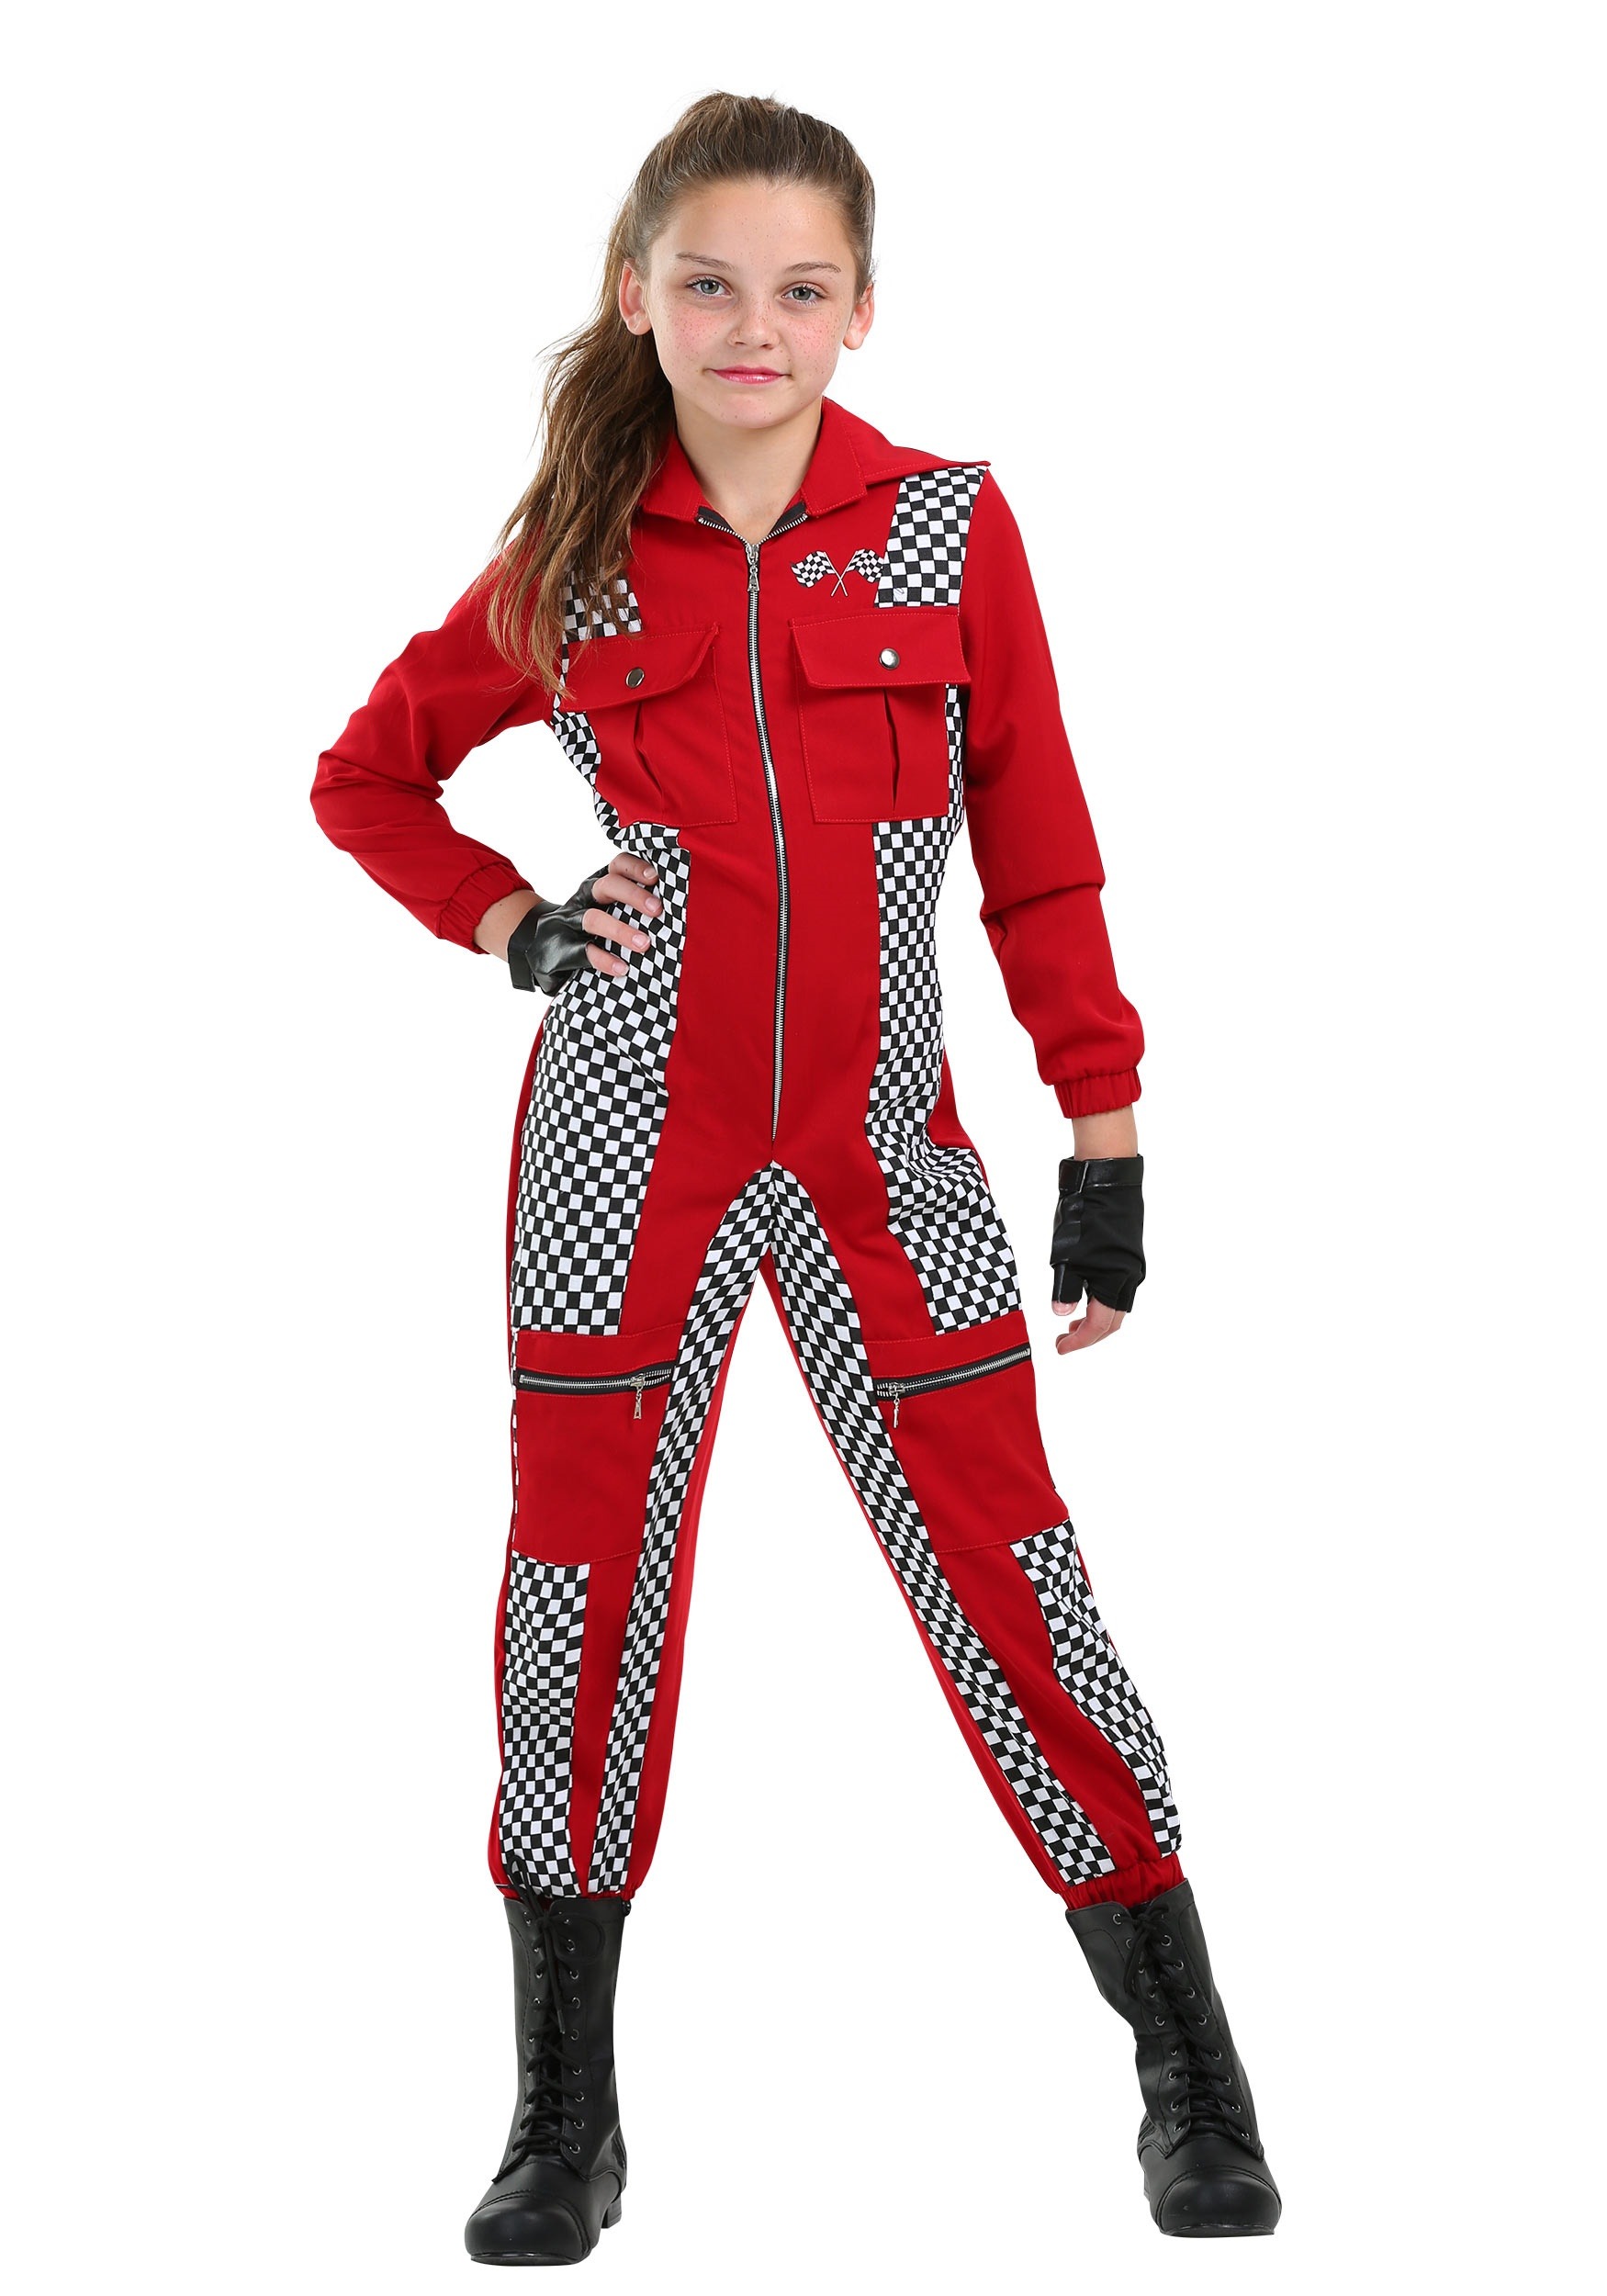 Photos - Fancy Dress RACER FUN Costumes  Jumpsuit Costume for Girls | Race Car Costumes Black 